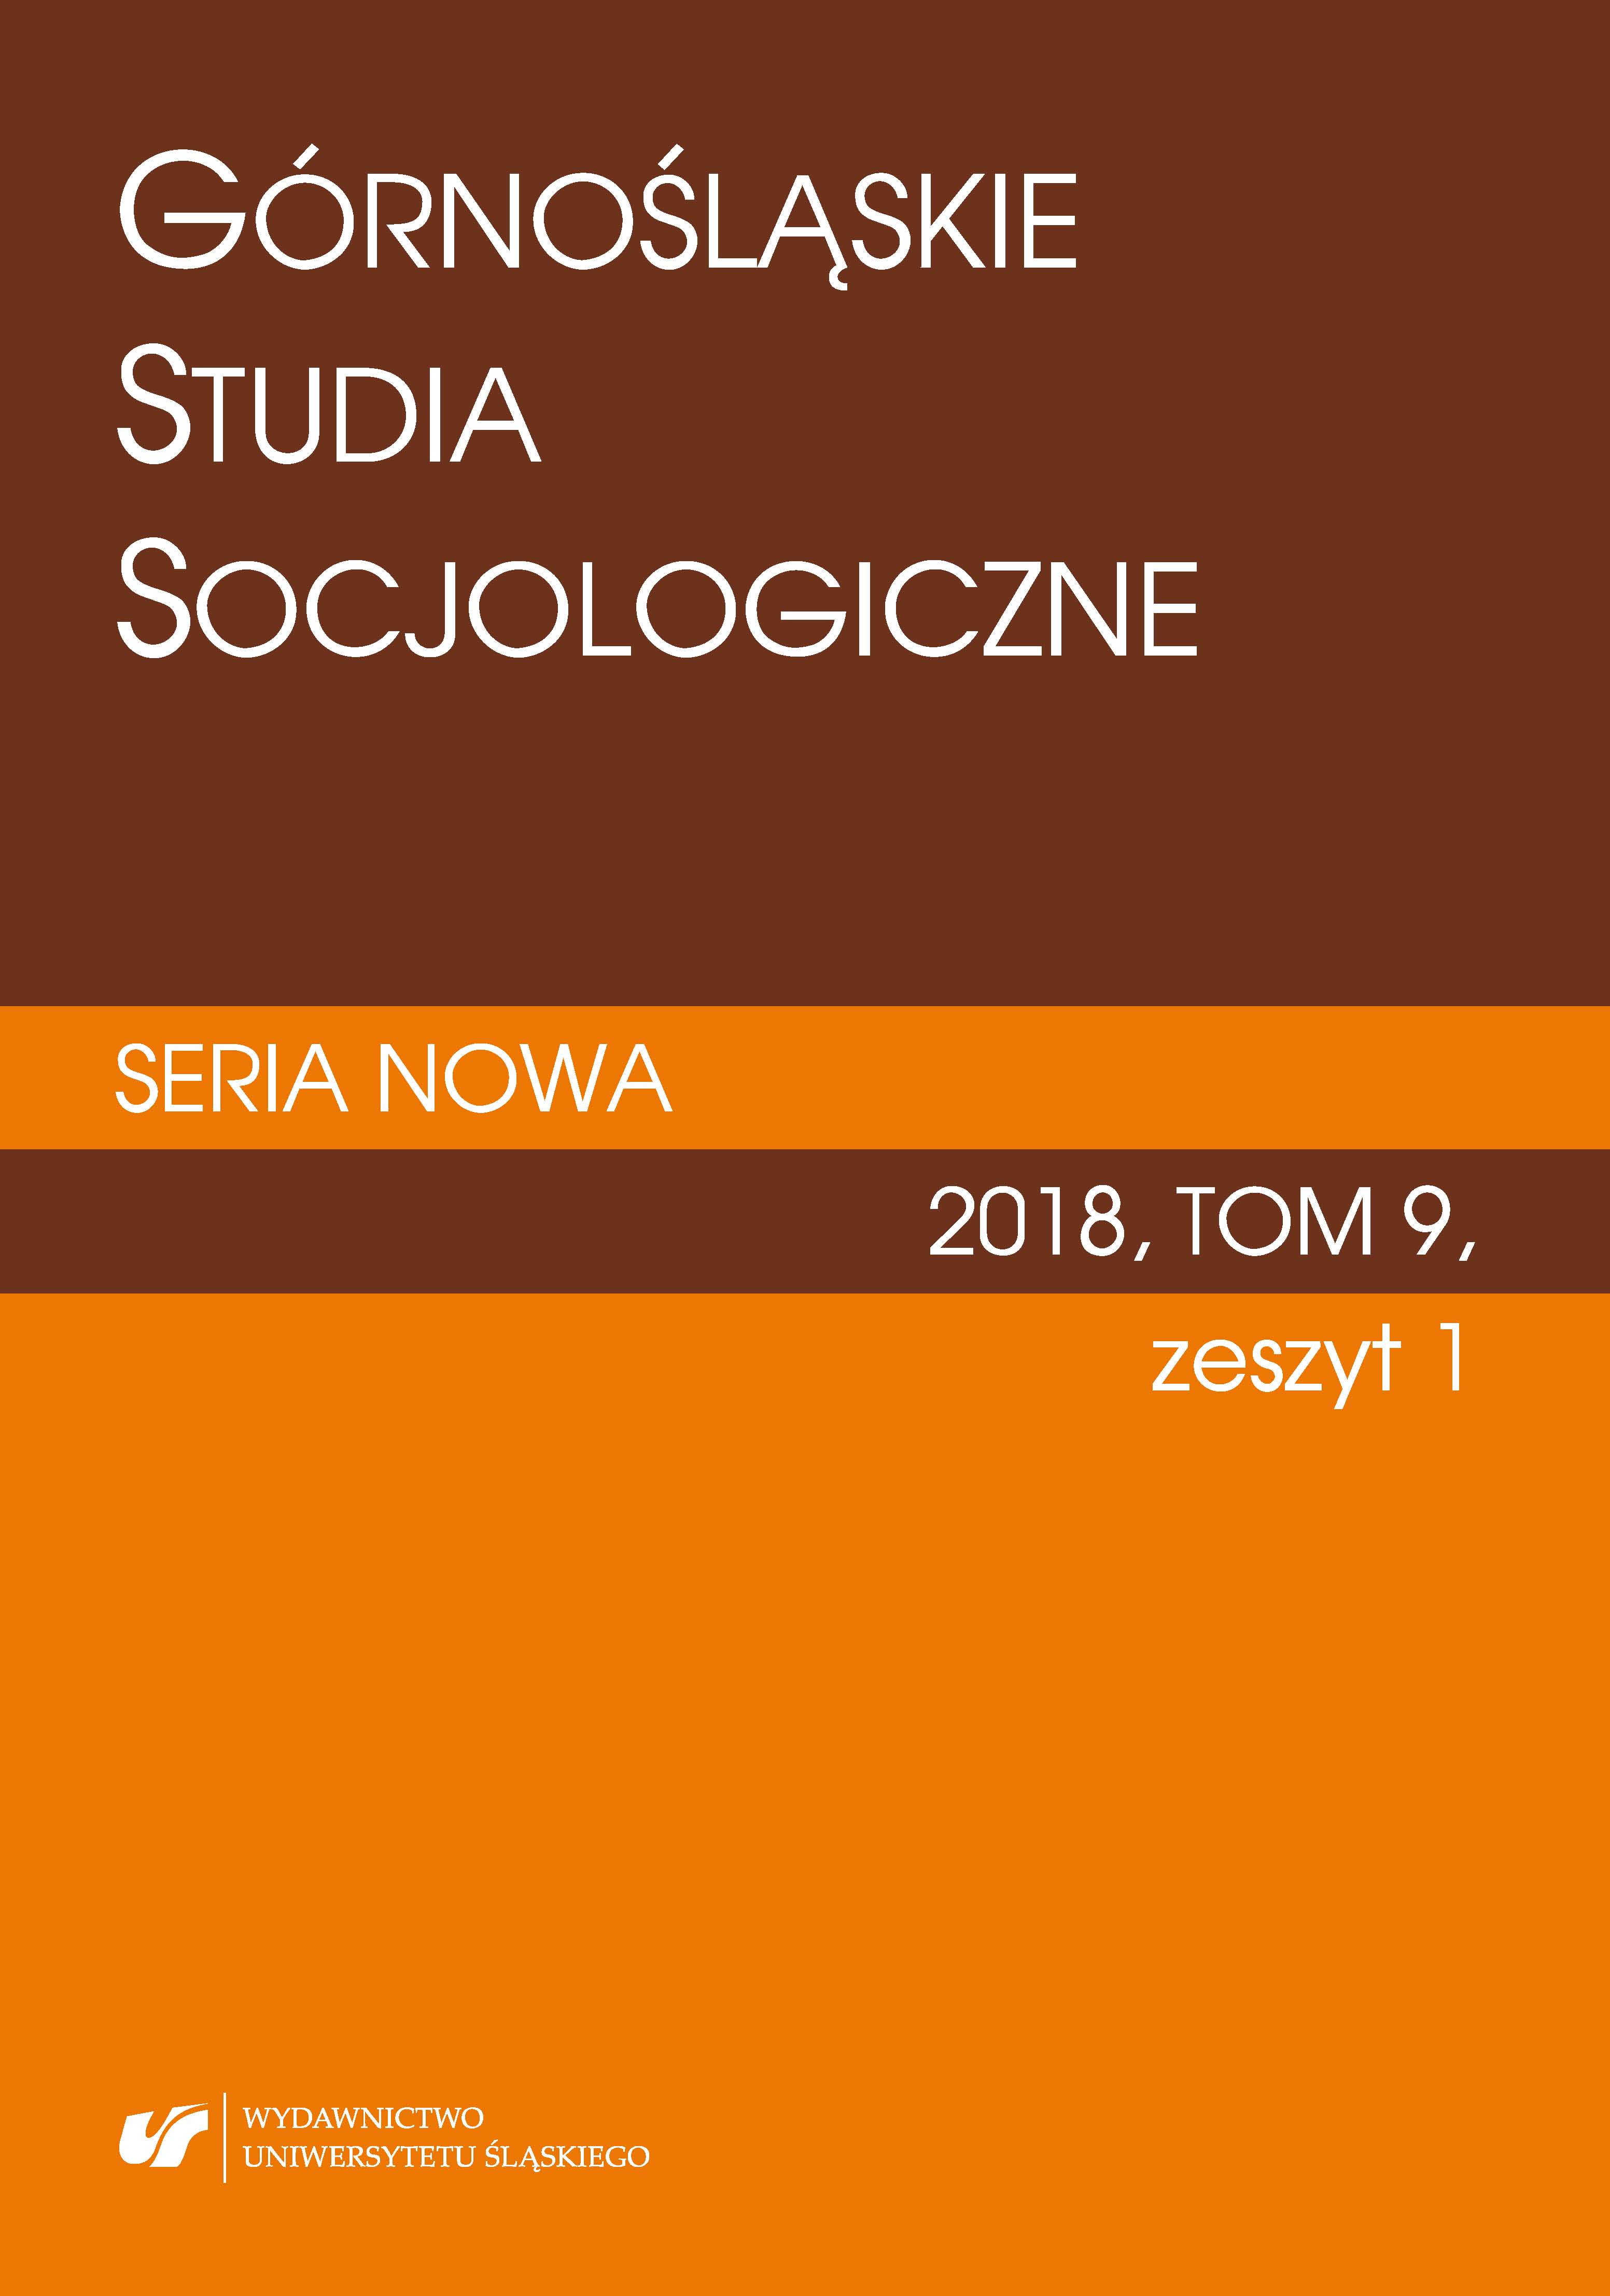 Sociologist — a Precarian? On Professional Identity of Sociology Graduates Cover Image